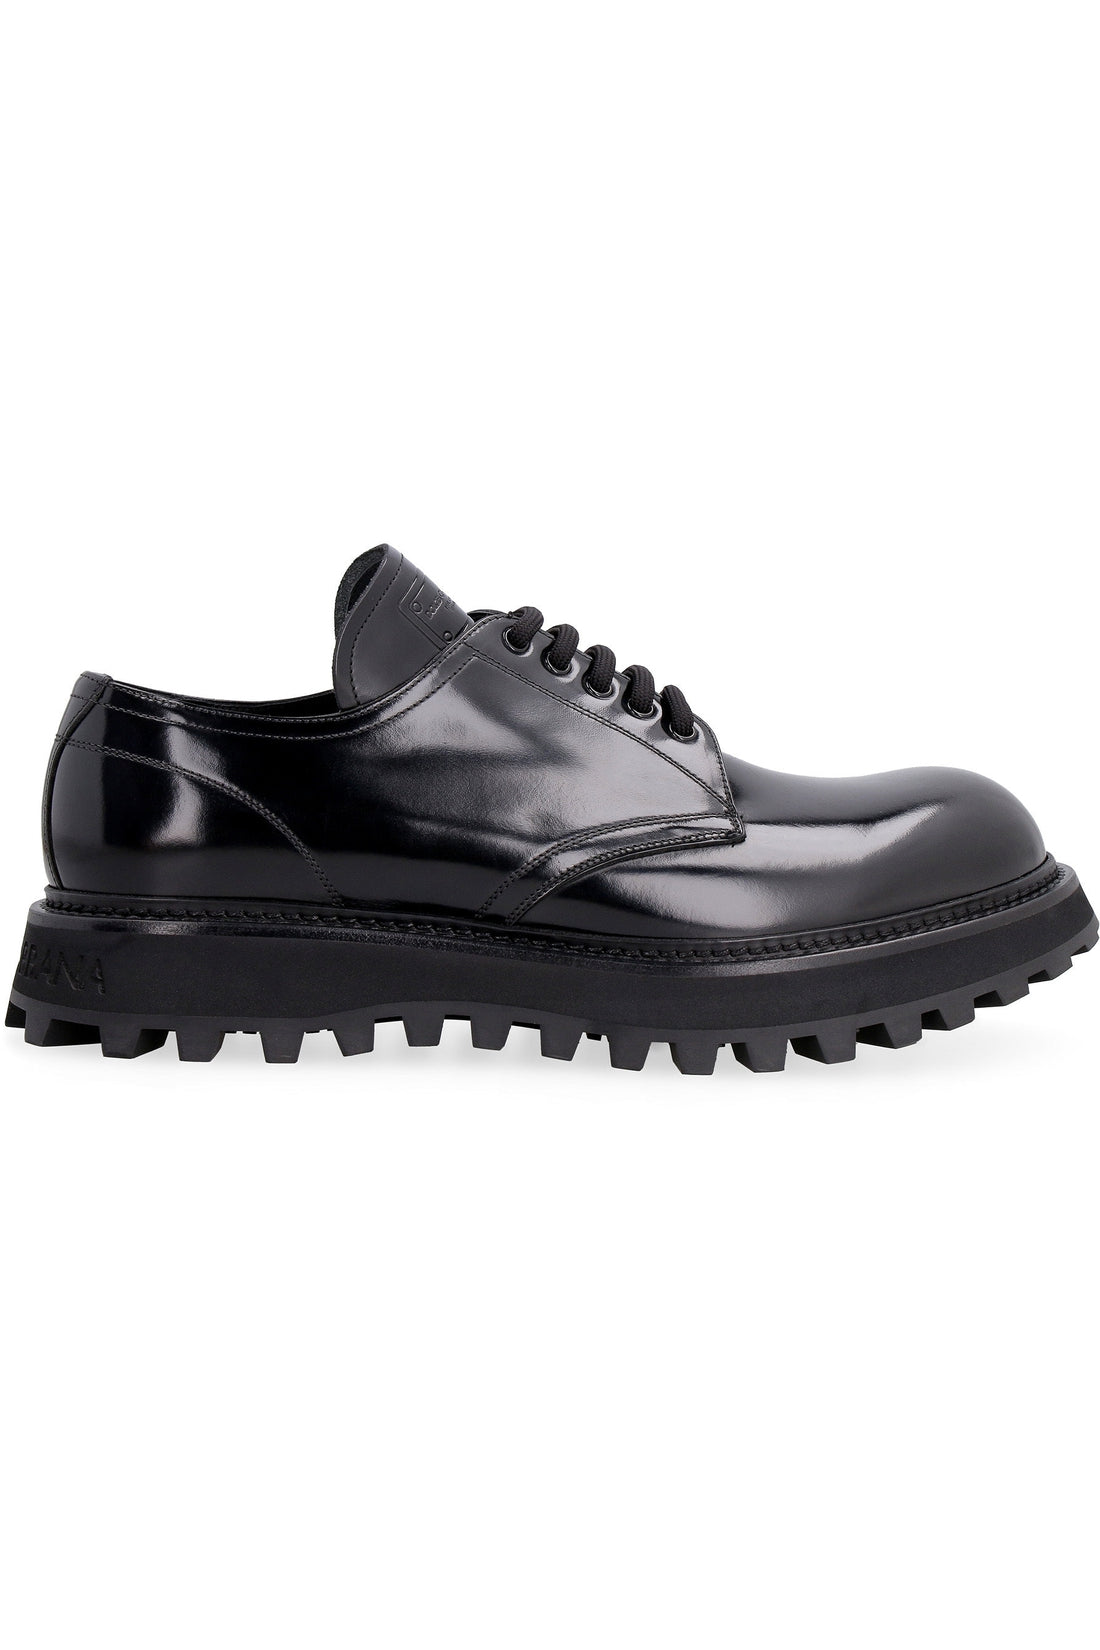 Dolce & Gabbana-OUTLET-SALE-Leather lace-up derby shoes-ARCHIVIST